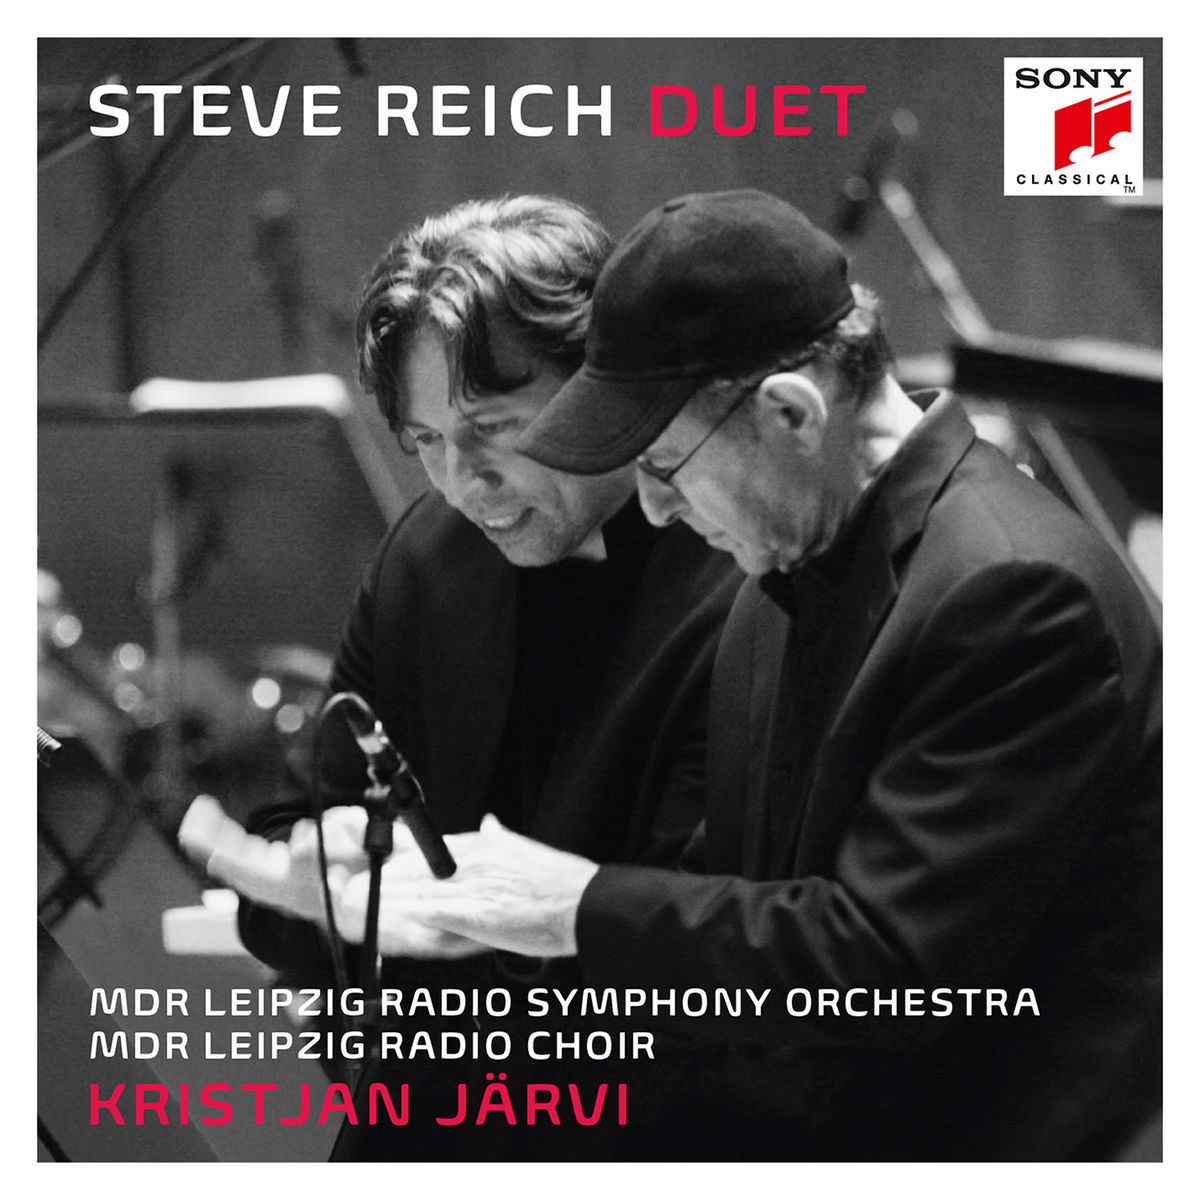 MDR Leipzig Radio Symphony Orchestra & Kristjan Jarvi - Steve Reich: Duet (2016) [FLAC 24bit/48kHz]